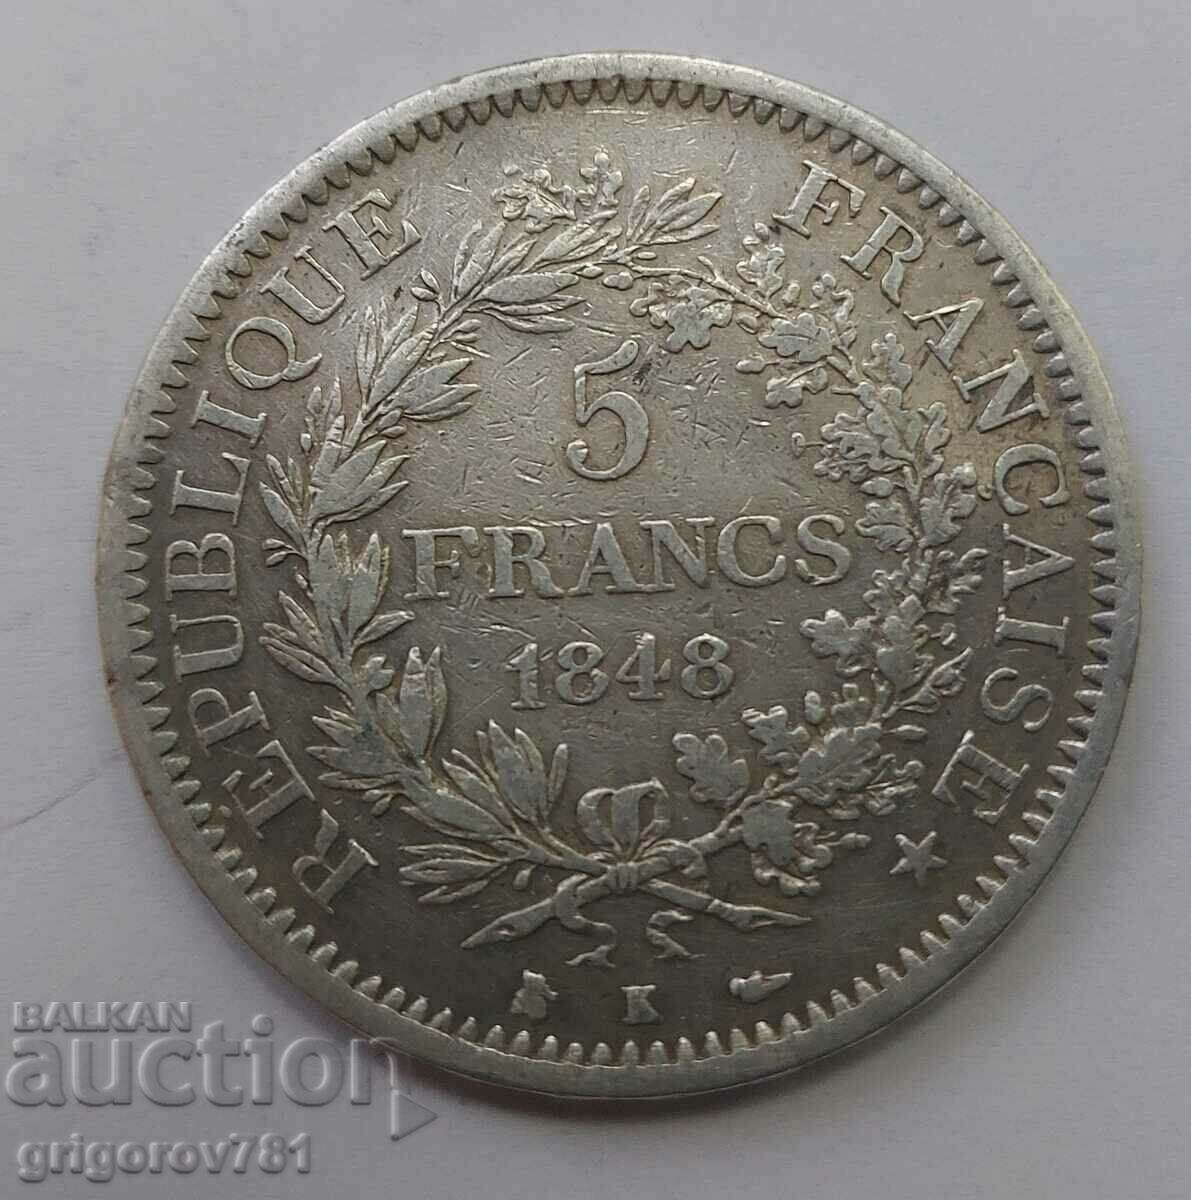 5 Francs Silver France 1848 K - Silver Coin #92